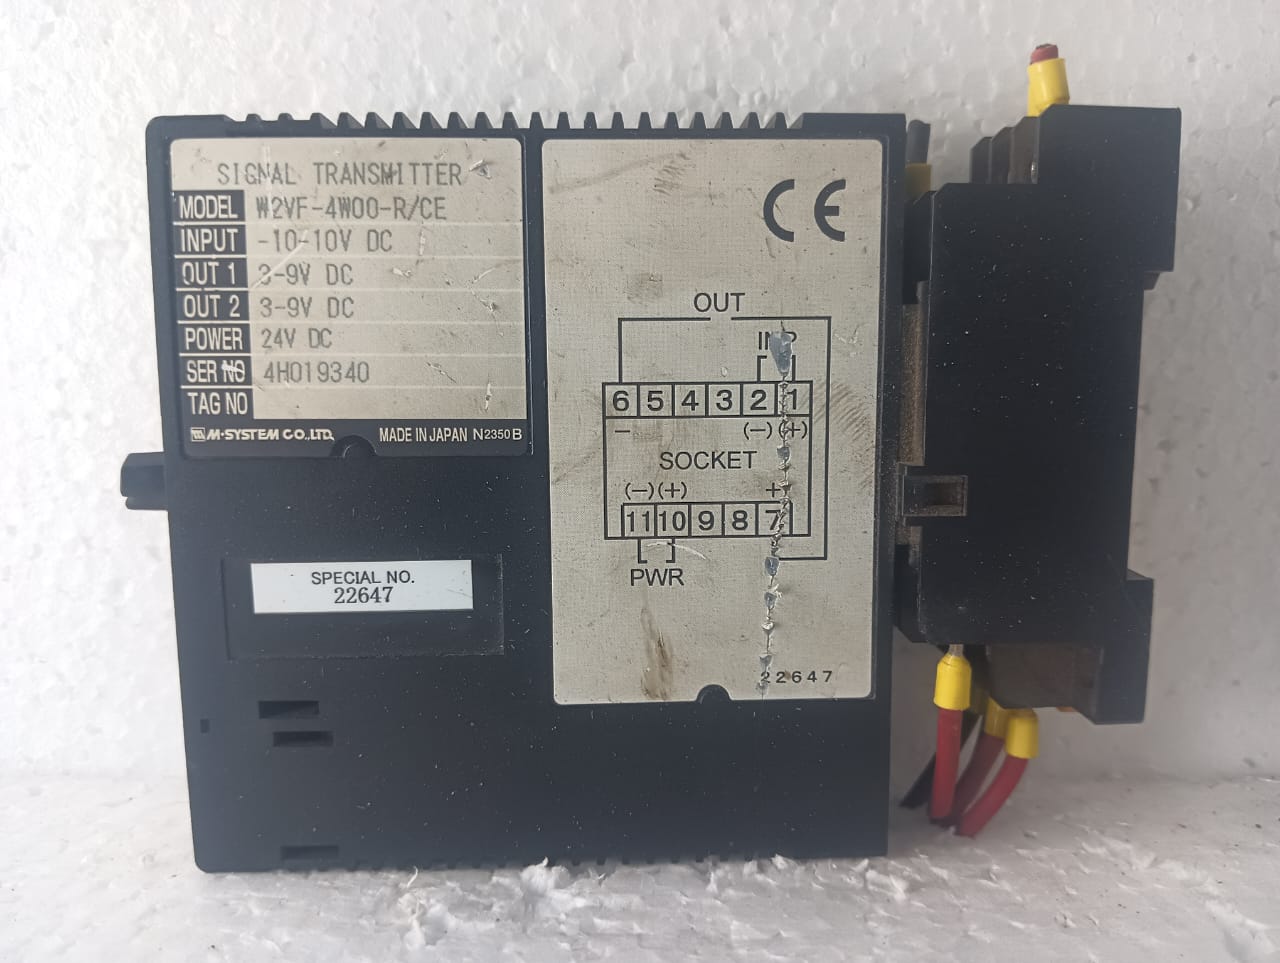 Electrical Parts_M SYSTEM_W2VF-4W00-R/CE